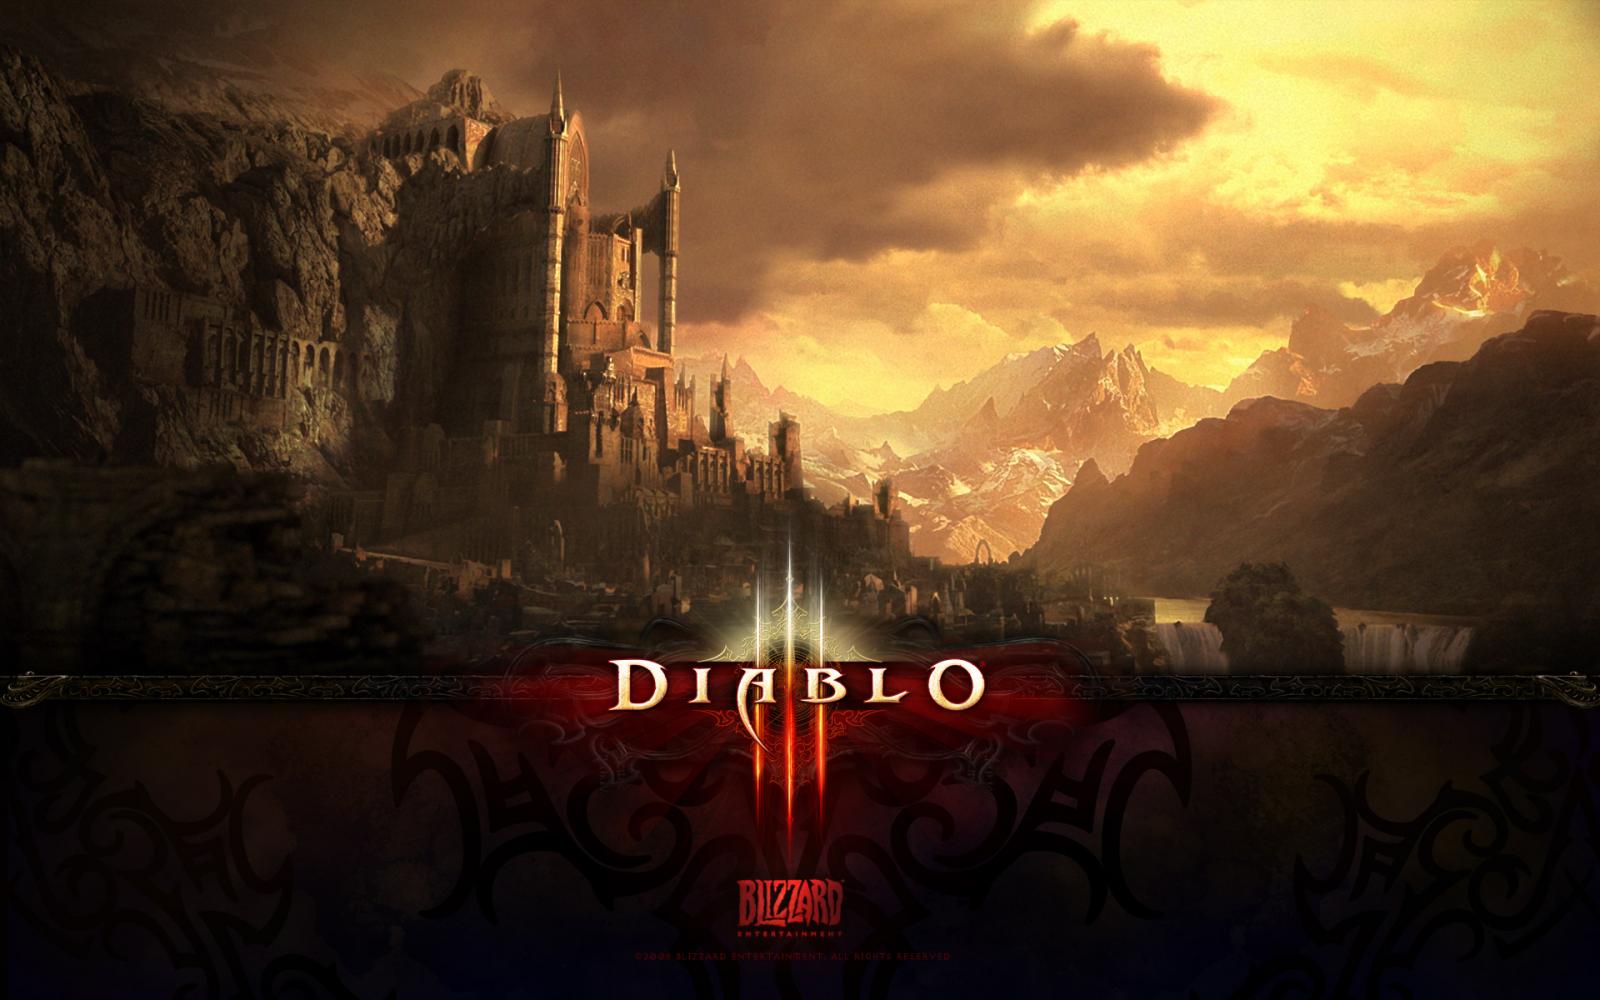 Wallpaper Diablo 3 UREH Jeux video